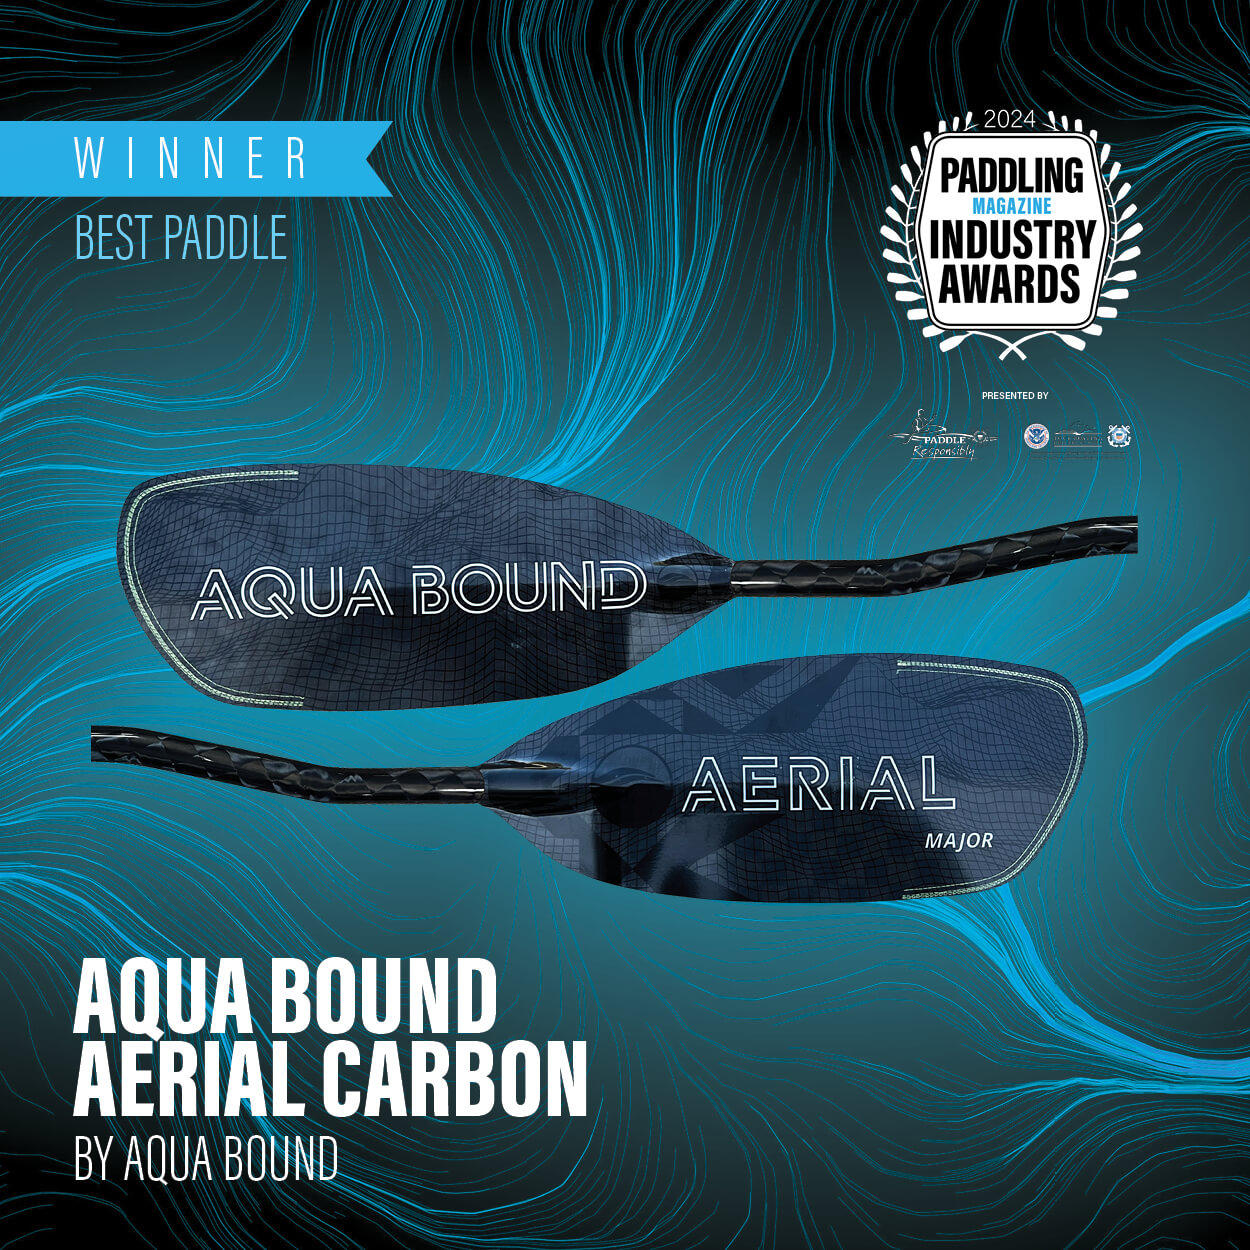 Aerial Major Carbon 2-Piece Versa-Lok Crank Shaft Kayak Paddle